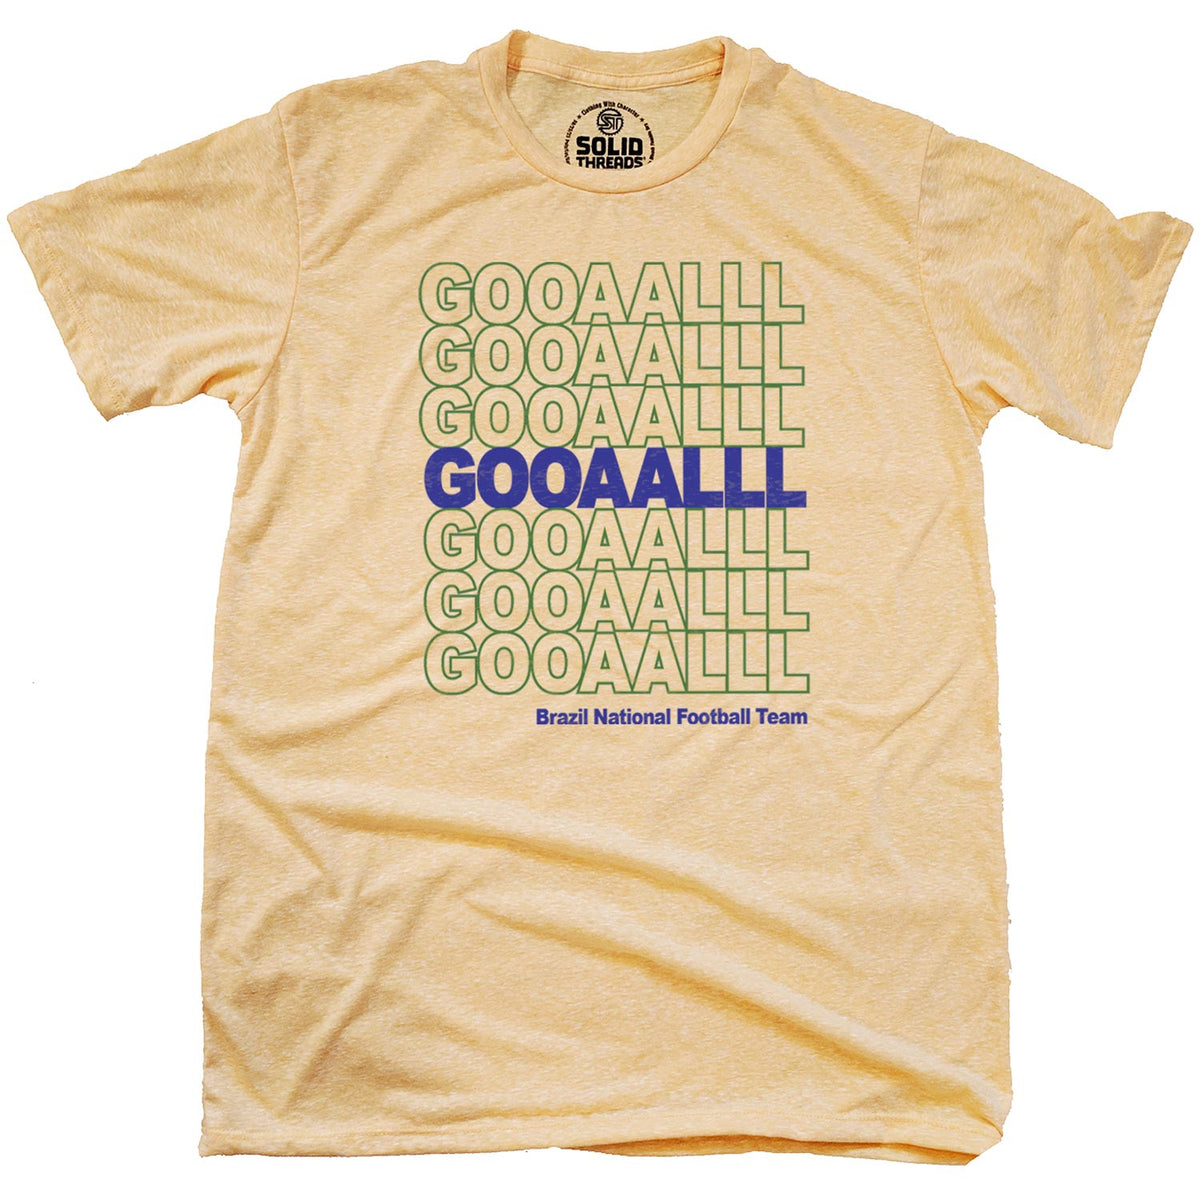 Men&#39;s Brazil Soccer Gooaalll Cool Football Graphic T-Shirt | Vintage Canarinho Tee | Solid Threads